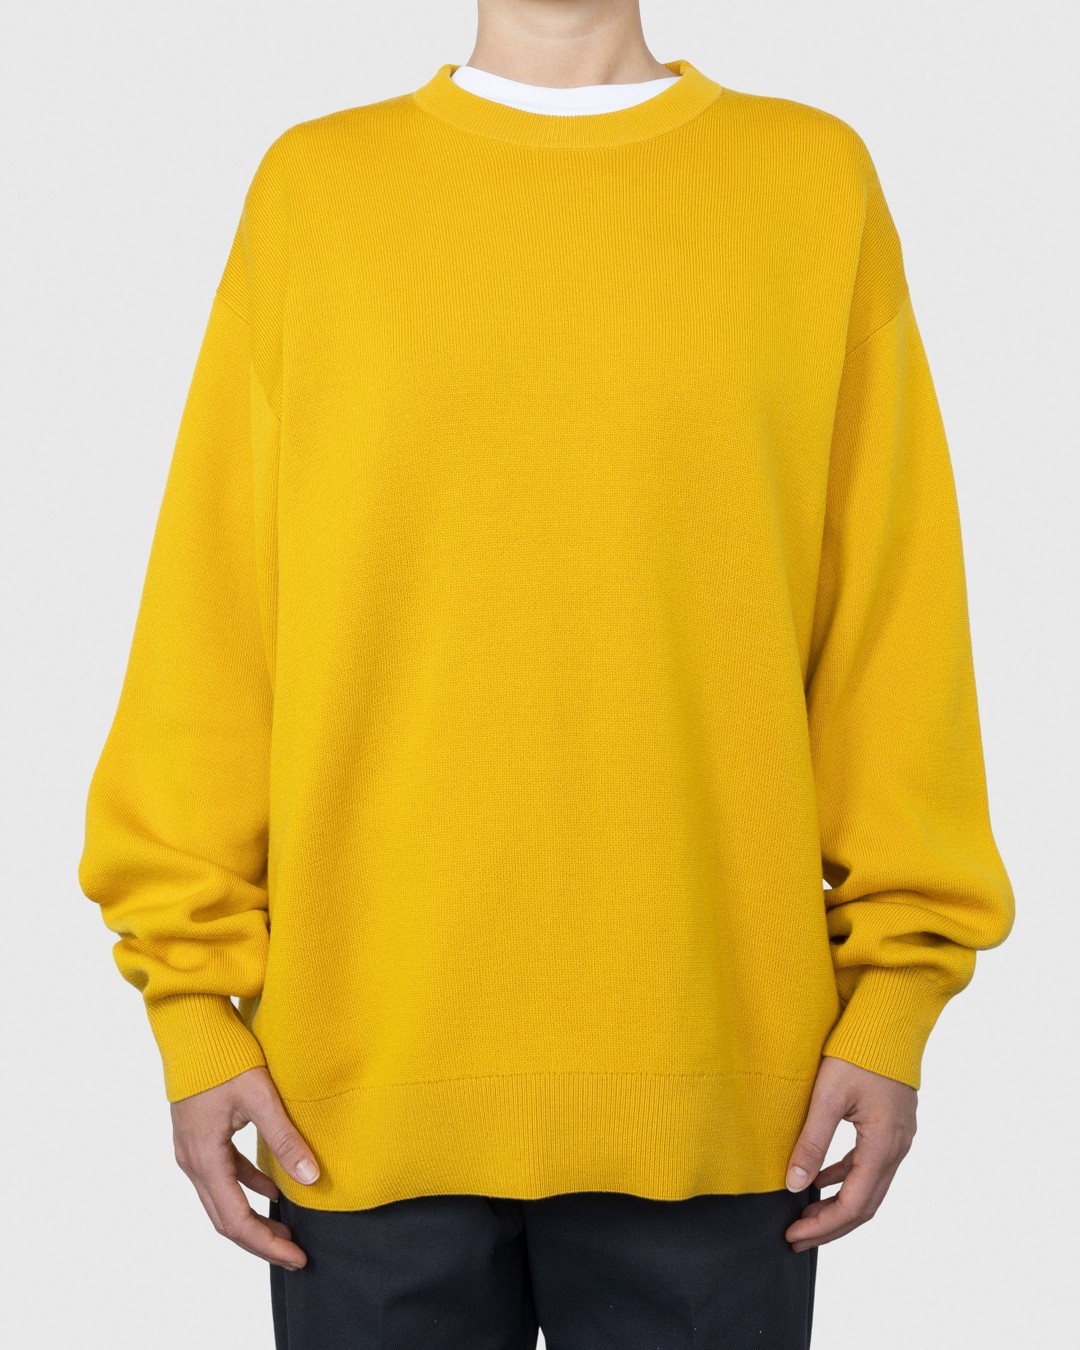 Acne Studios – Merino Wool Crewneck Sweater Yellow - Crewnecks - Yellow - Image 2